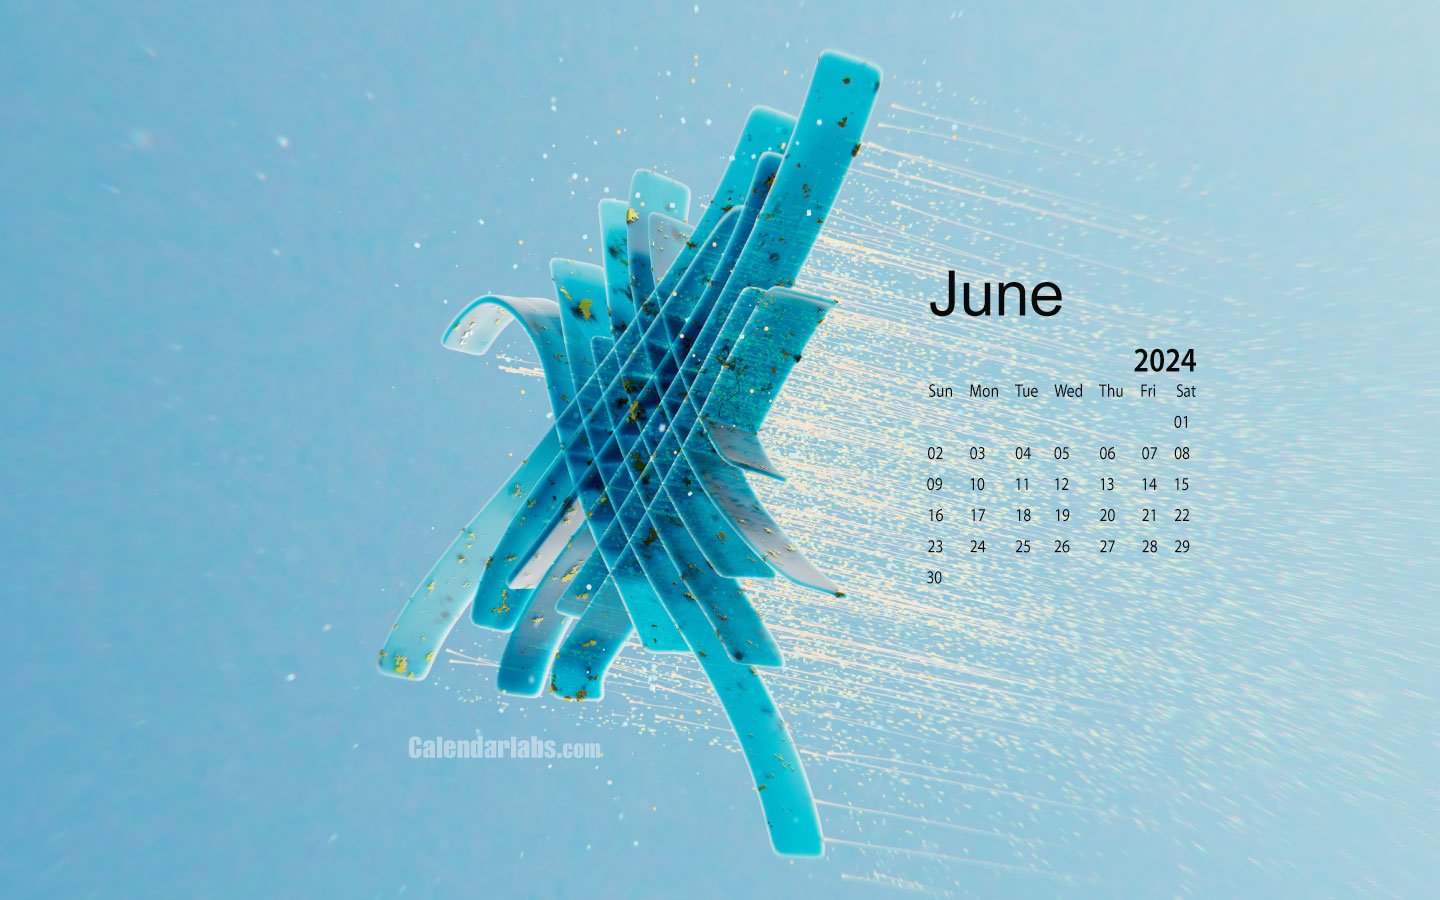 June 2024 Desktop Wallpaper Calendar